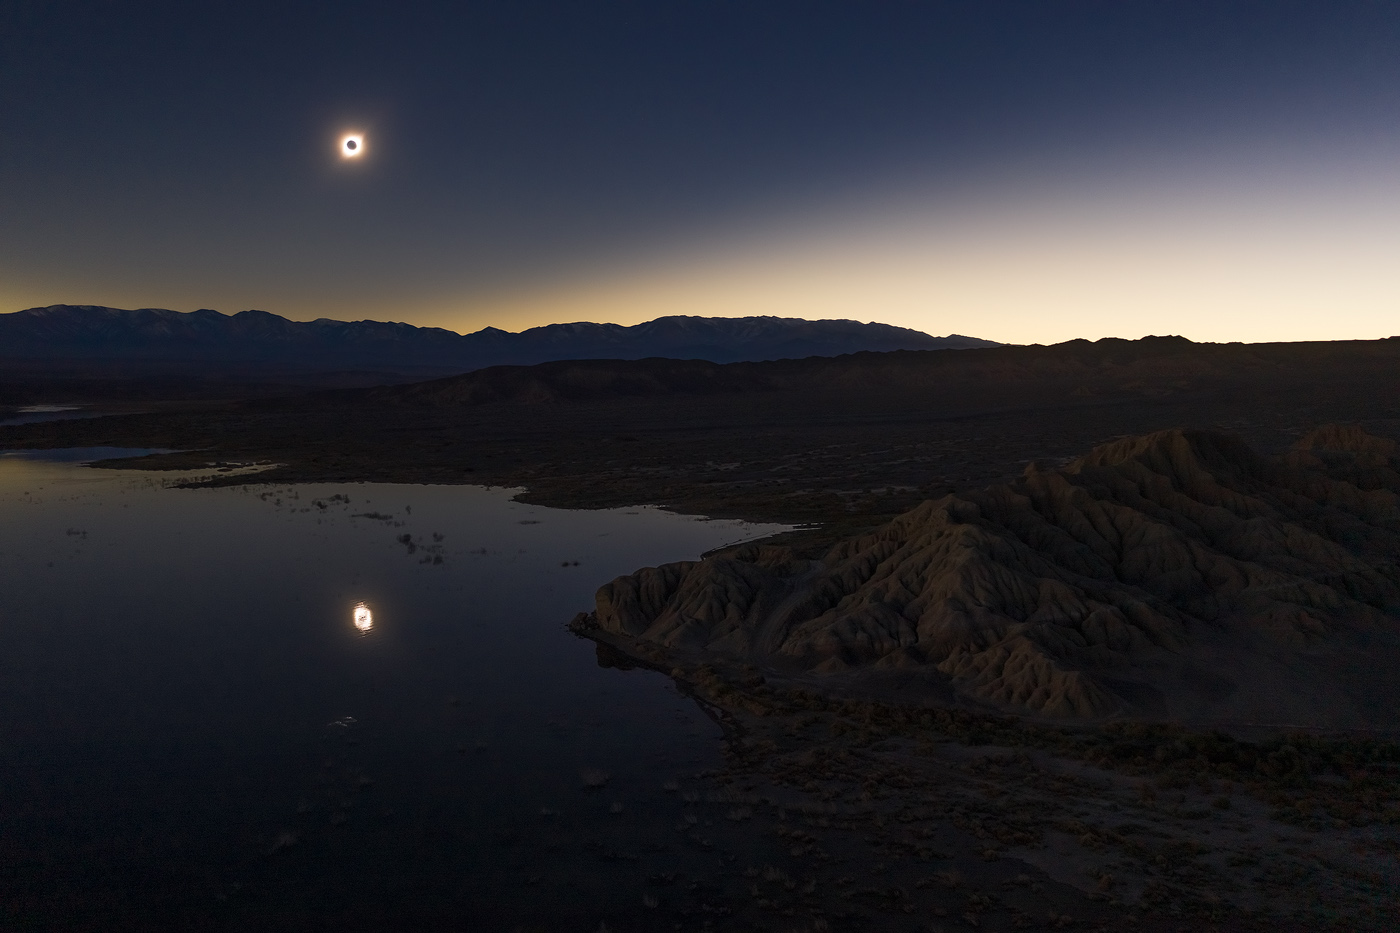 A very original shot: a total solar eclipse low in the sky, reflecting in a lake.<br>DJI Mavic II Pro, f/2.8, 1/10 sec, ISO 100 <br>Lago Cuesta del Viento, San Juan province, Argentina